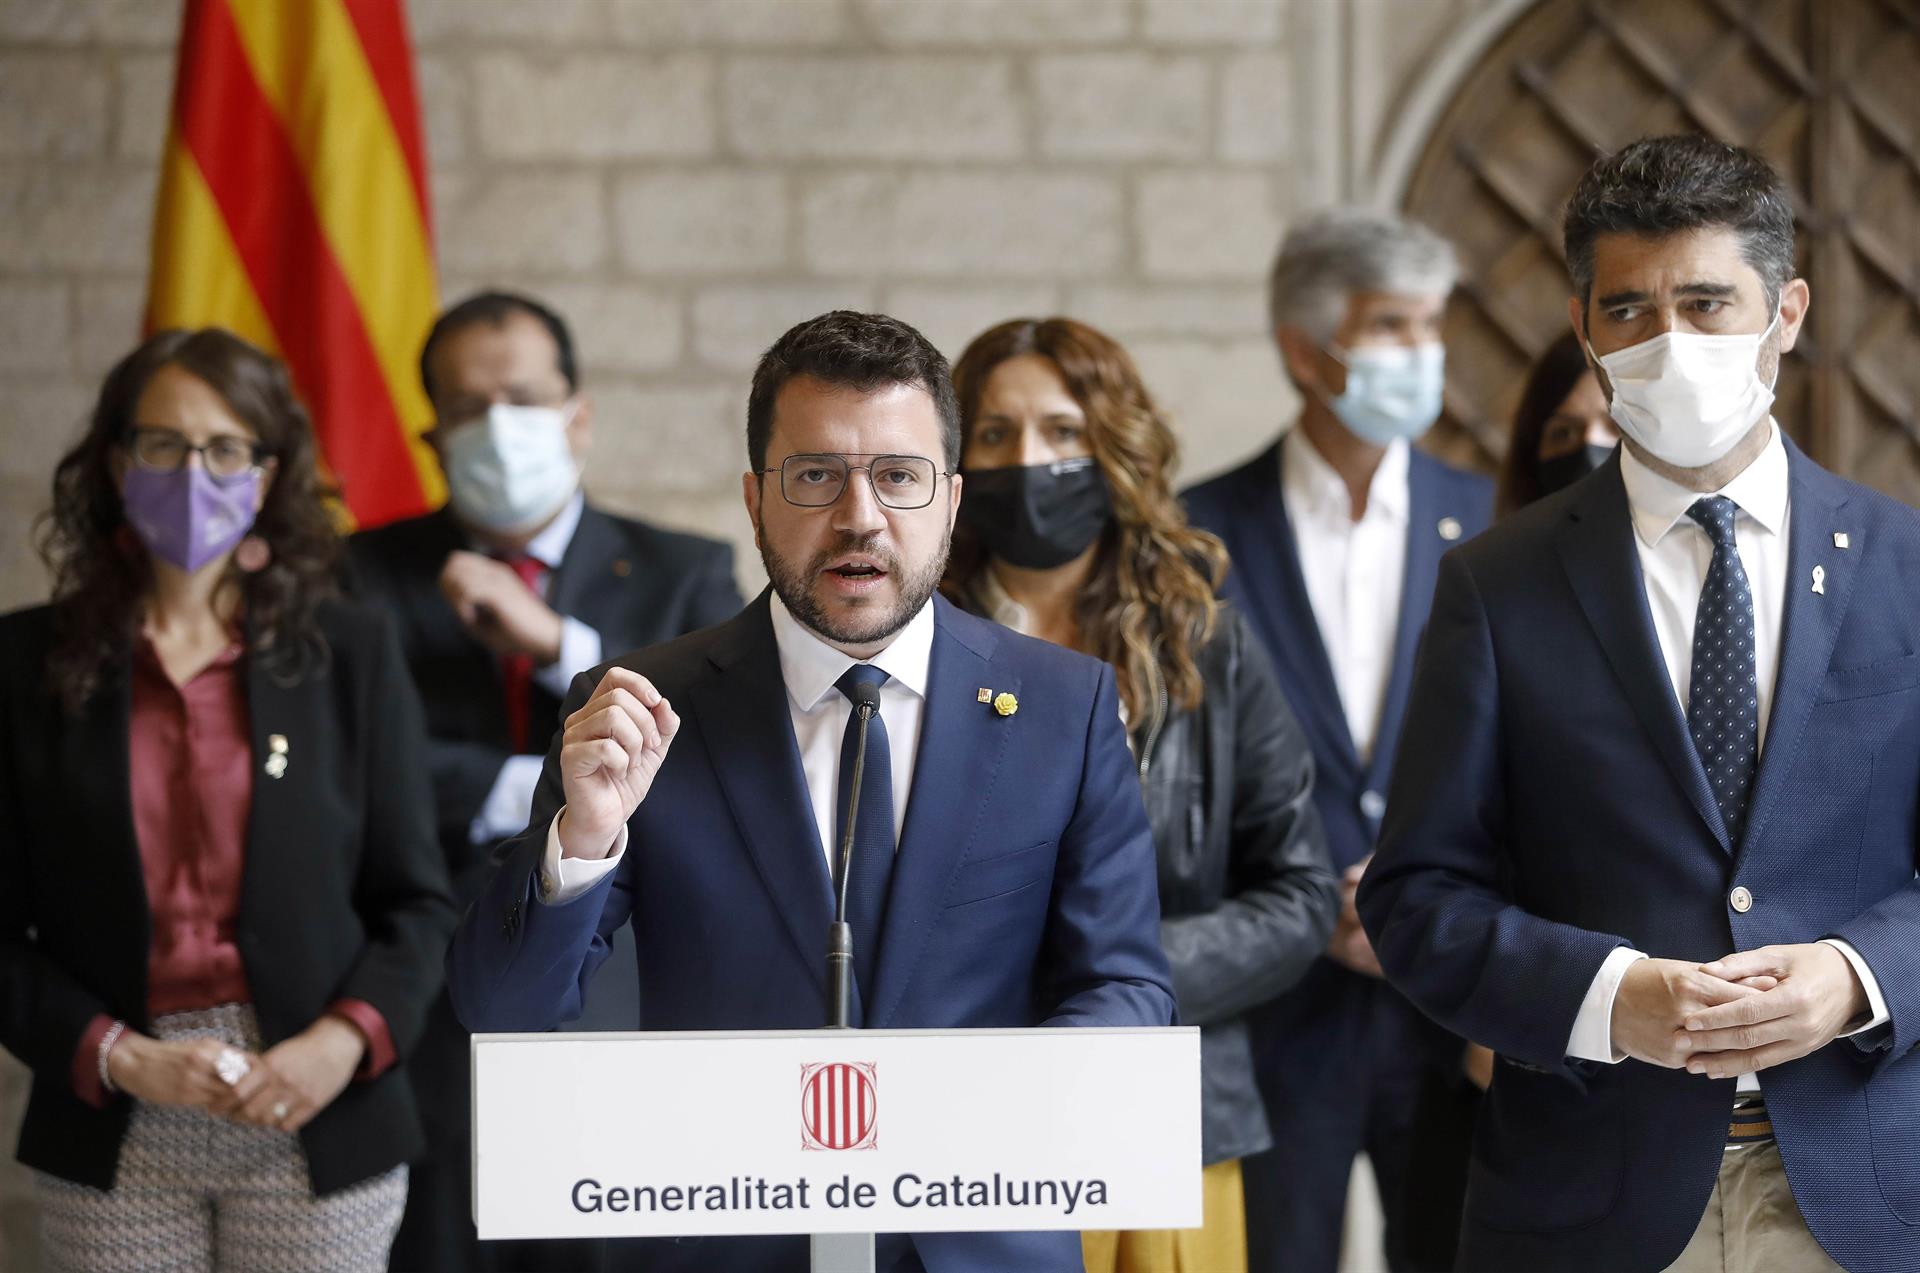 Aragonès celebra que Puigdemont quede en libertad pero critica "la persecución judicial" a la que está sometido